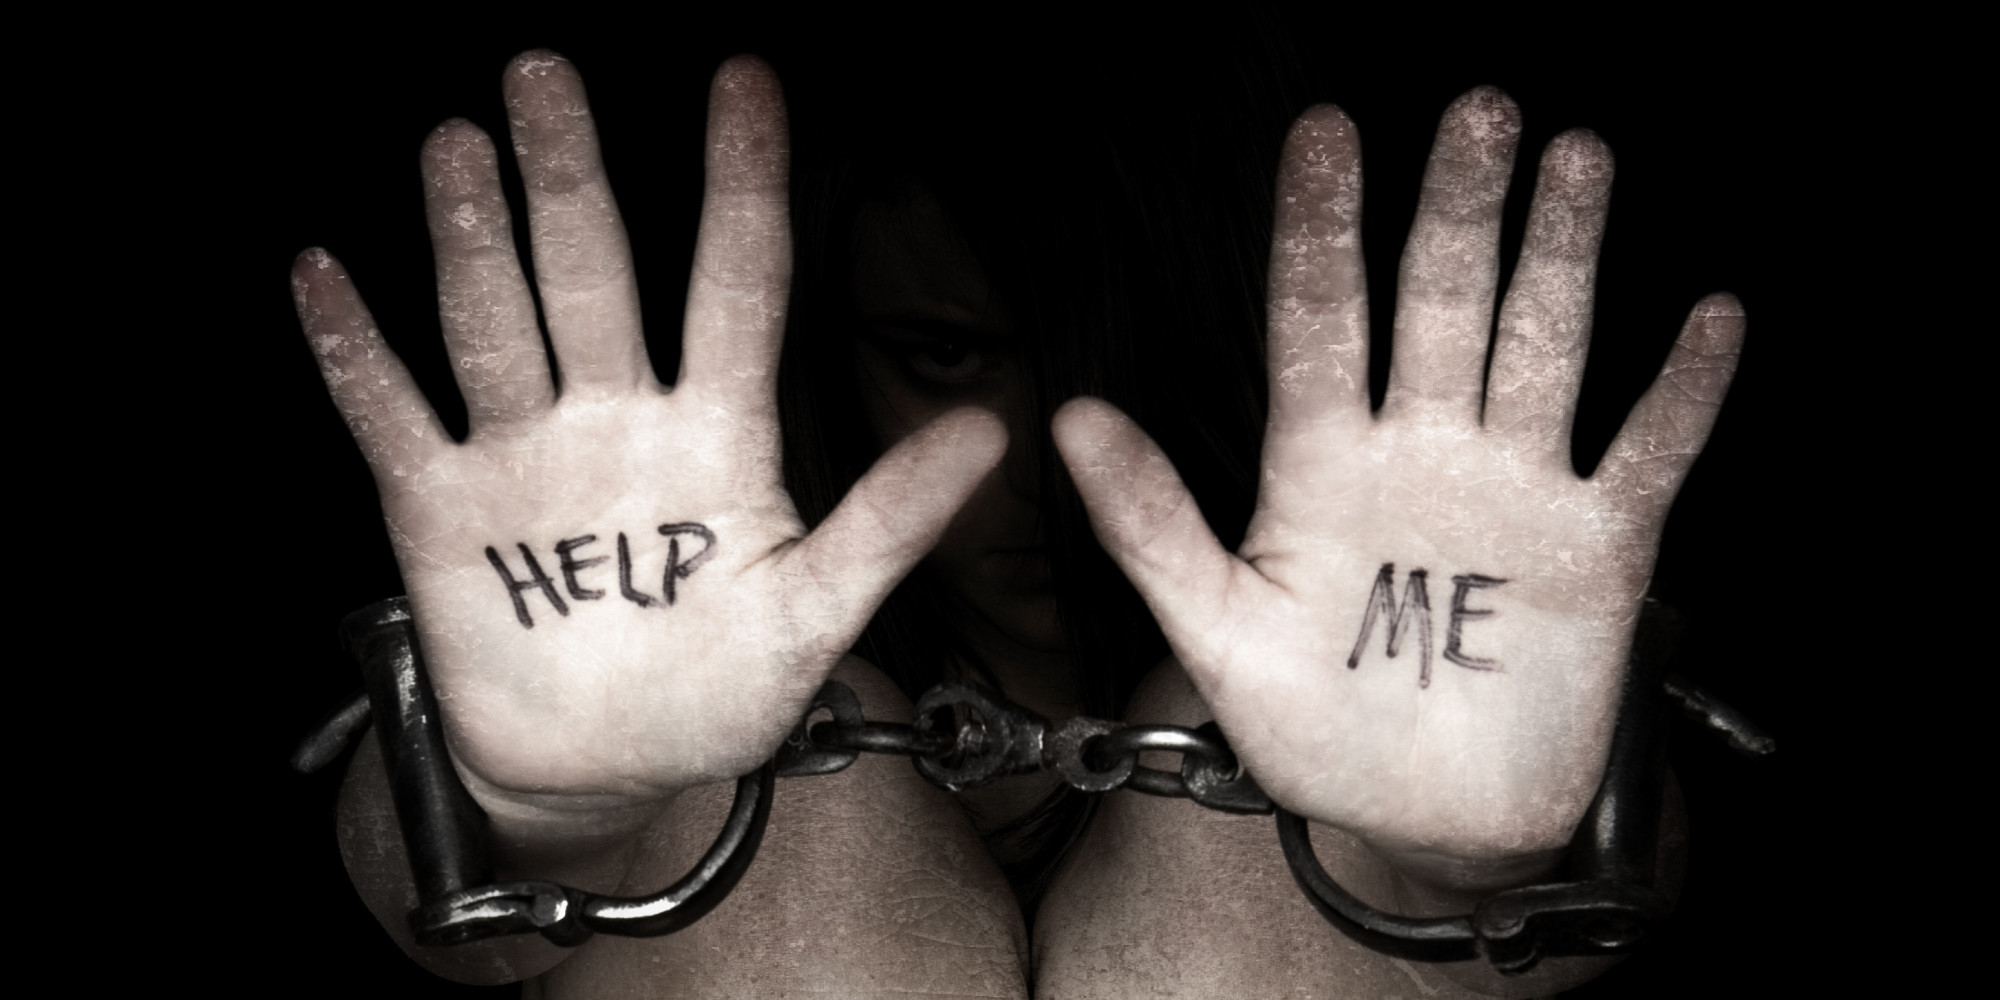 Image result for human trafficking